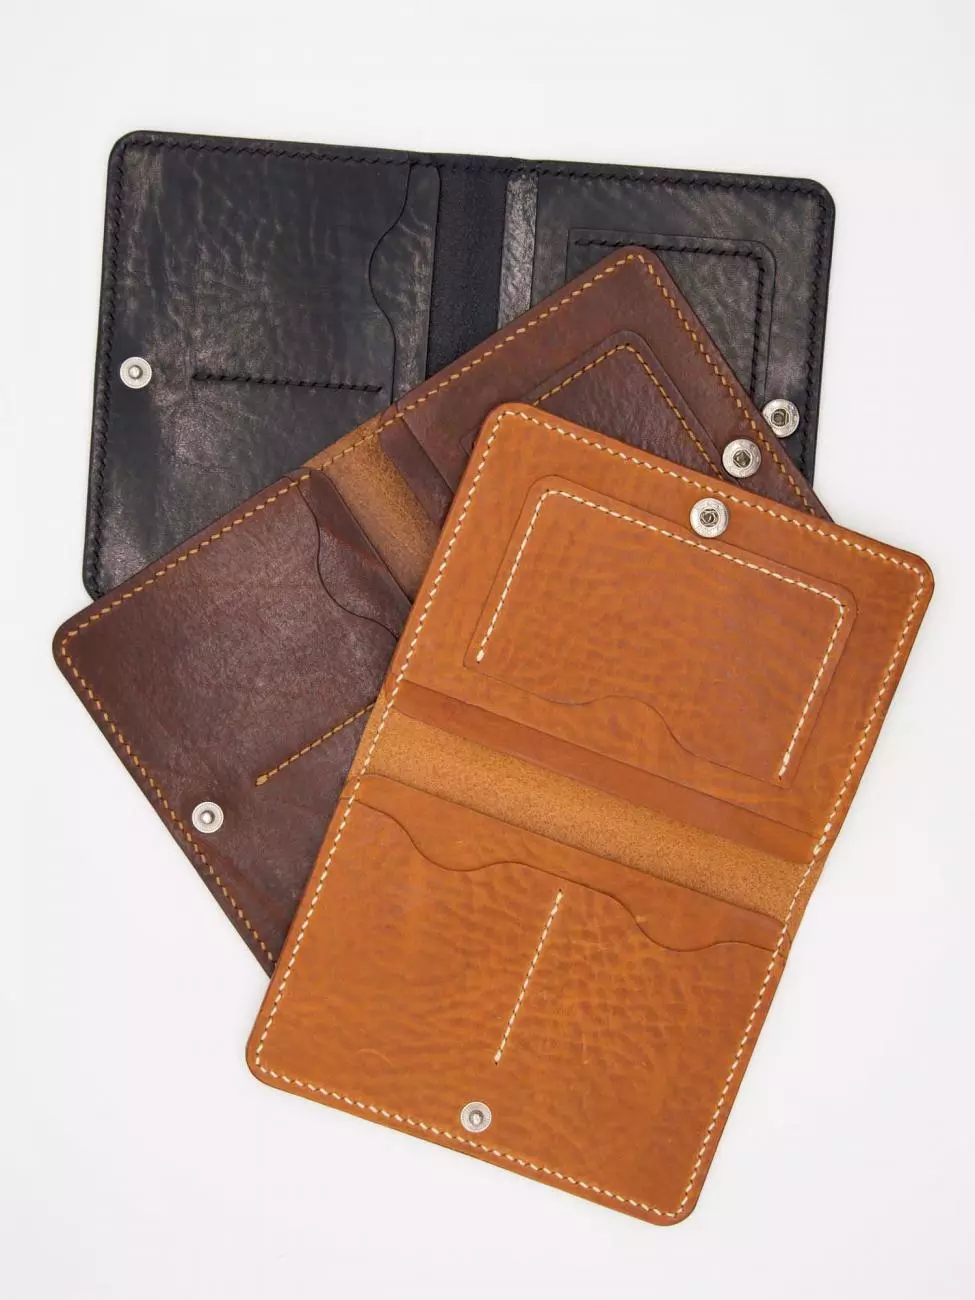 7 - Leather document holder